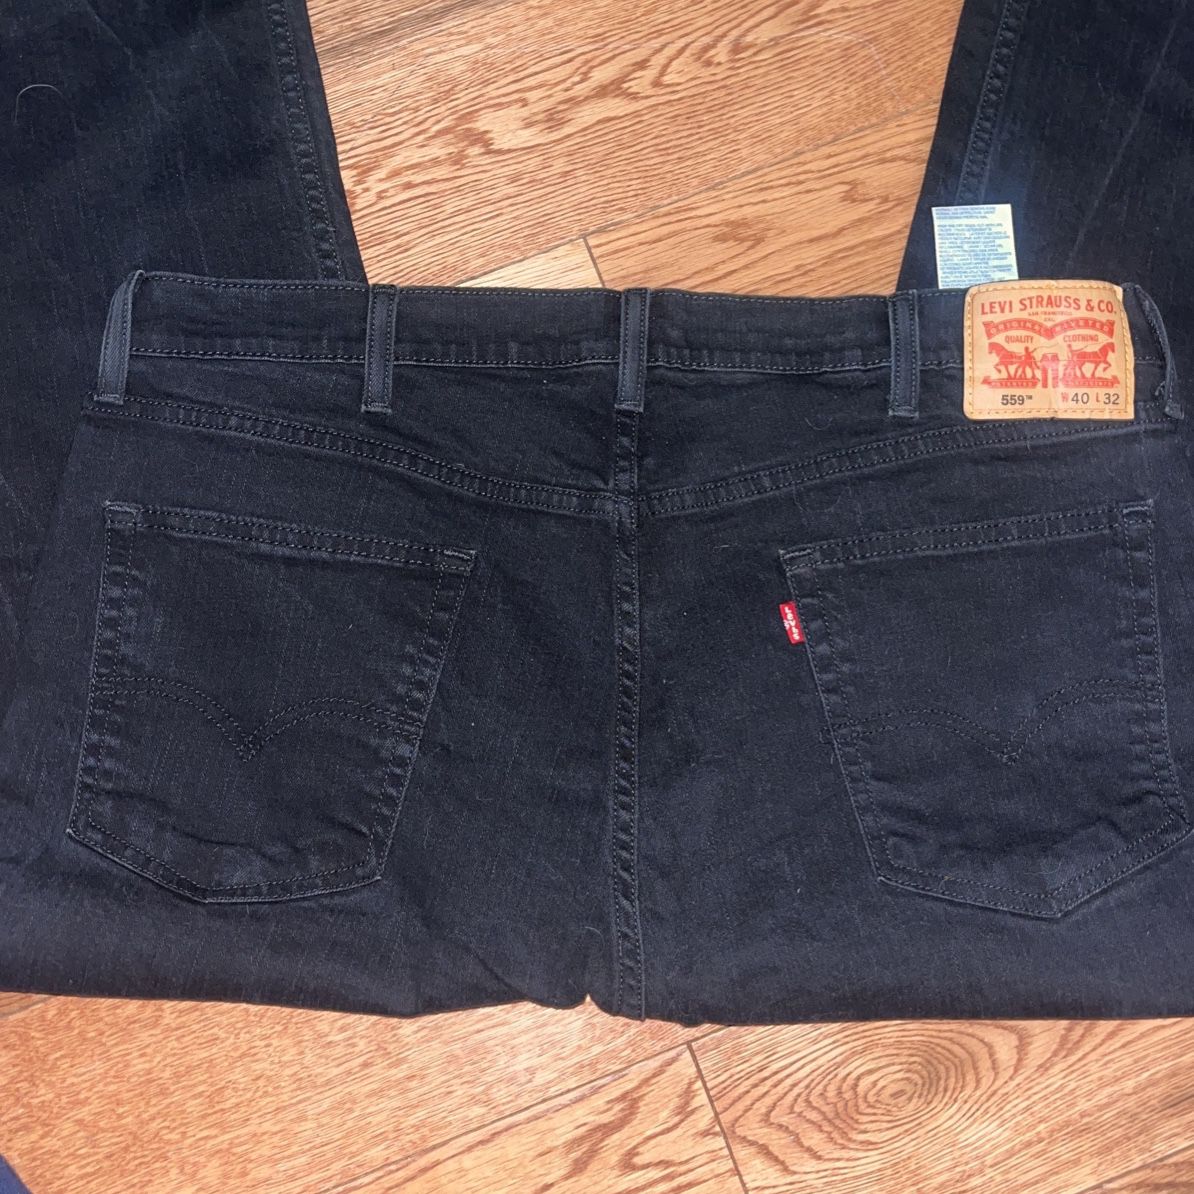 Brand New Black Levi 559 Size 40x32 Jeans